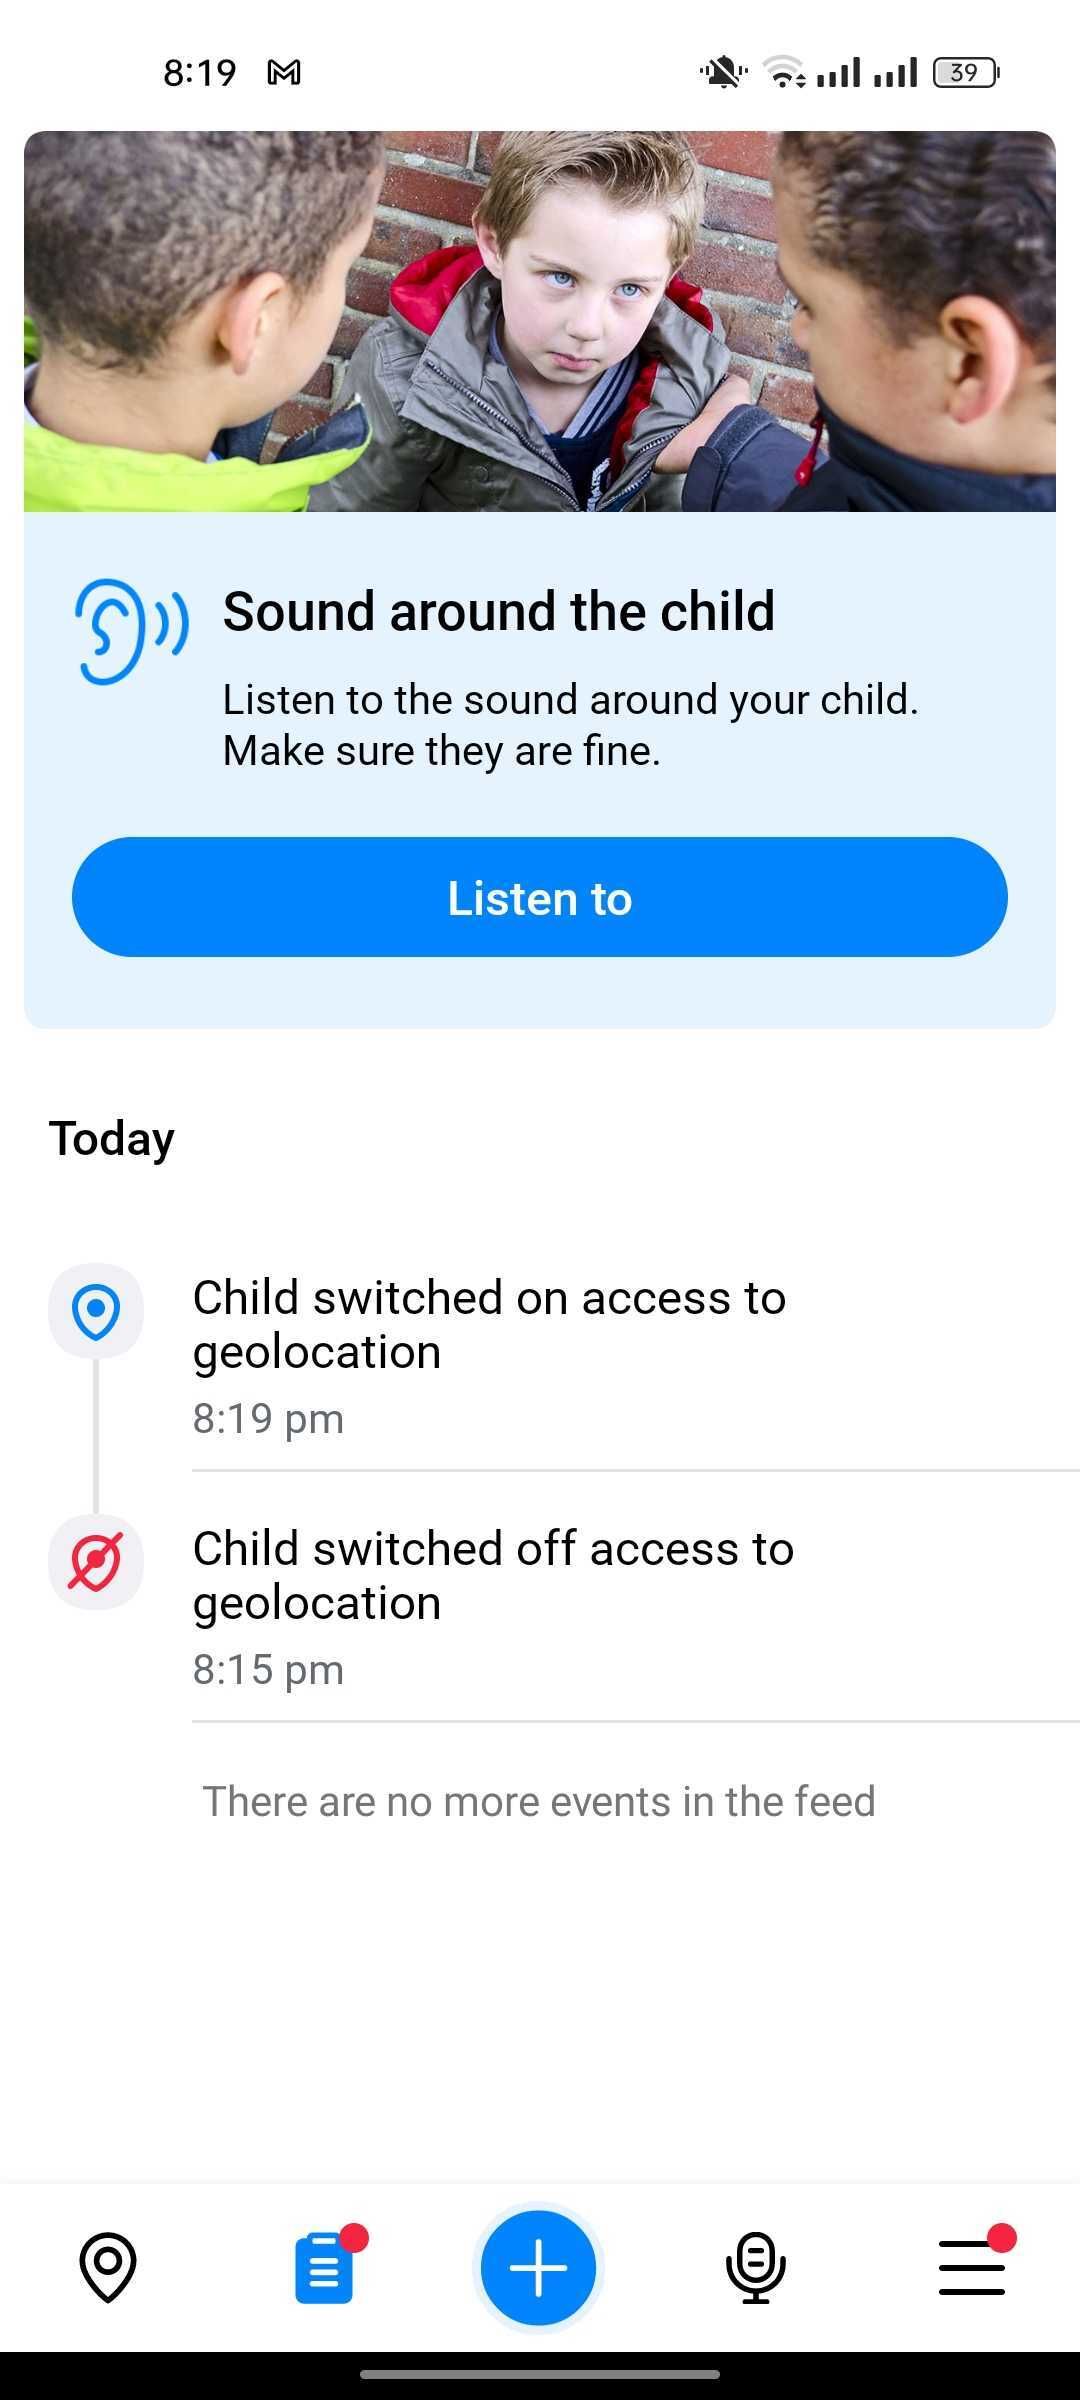 Listen to sounds around the child through the app